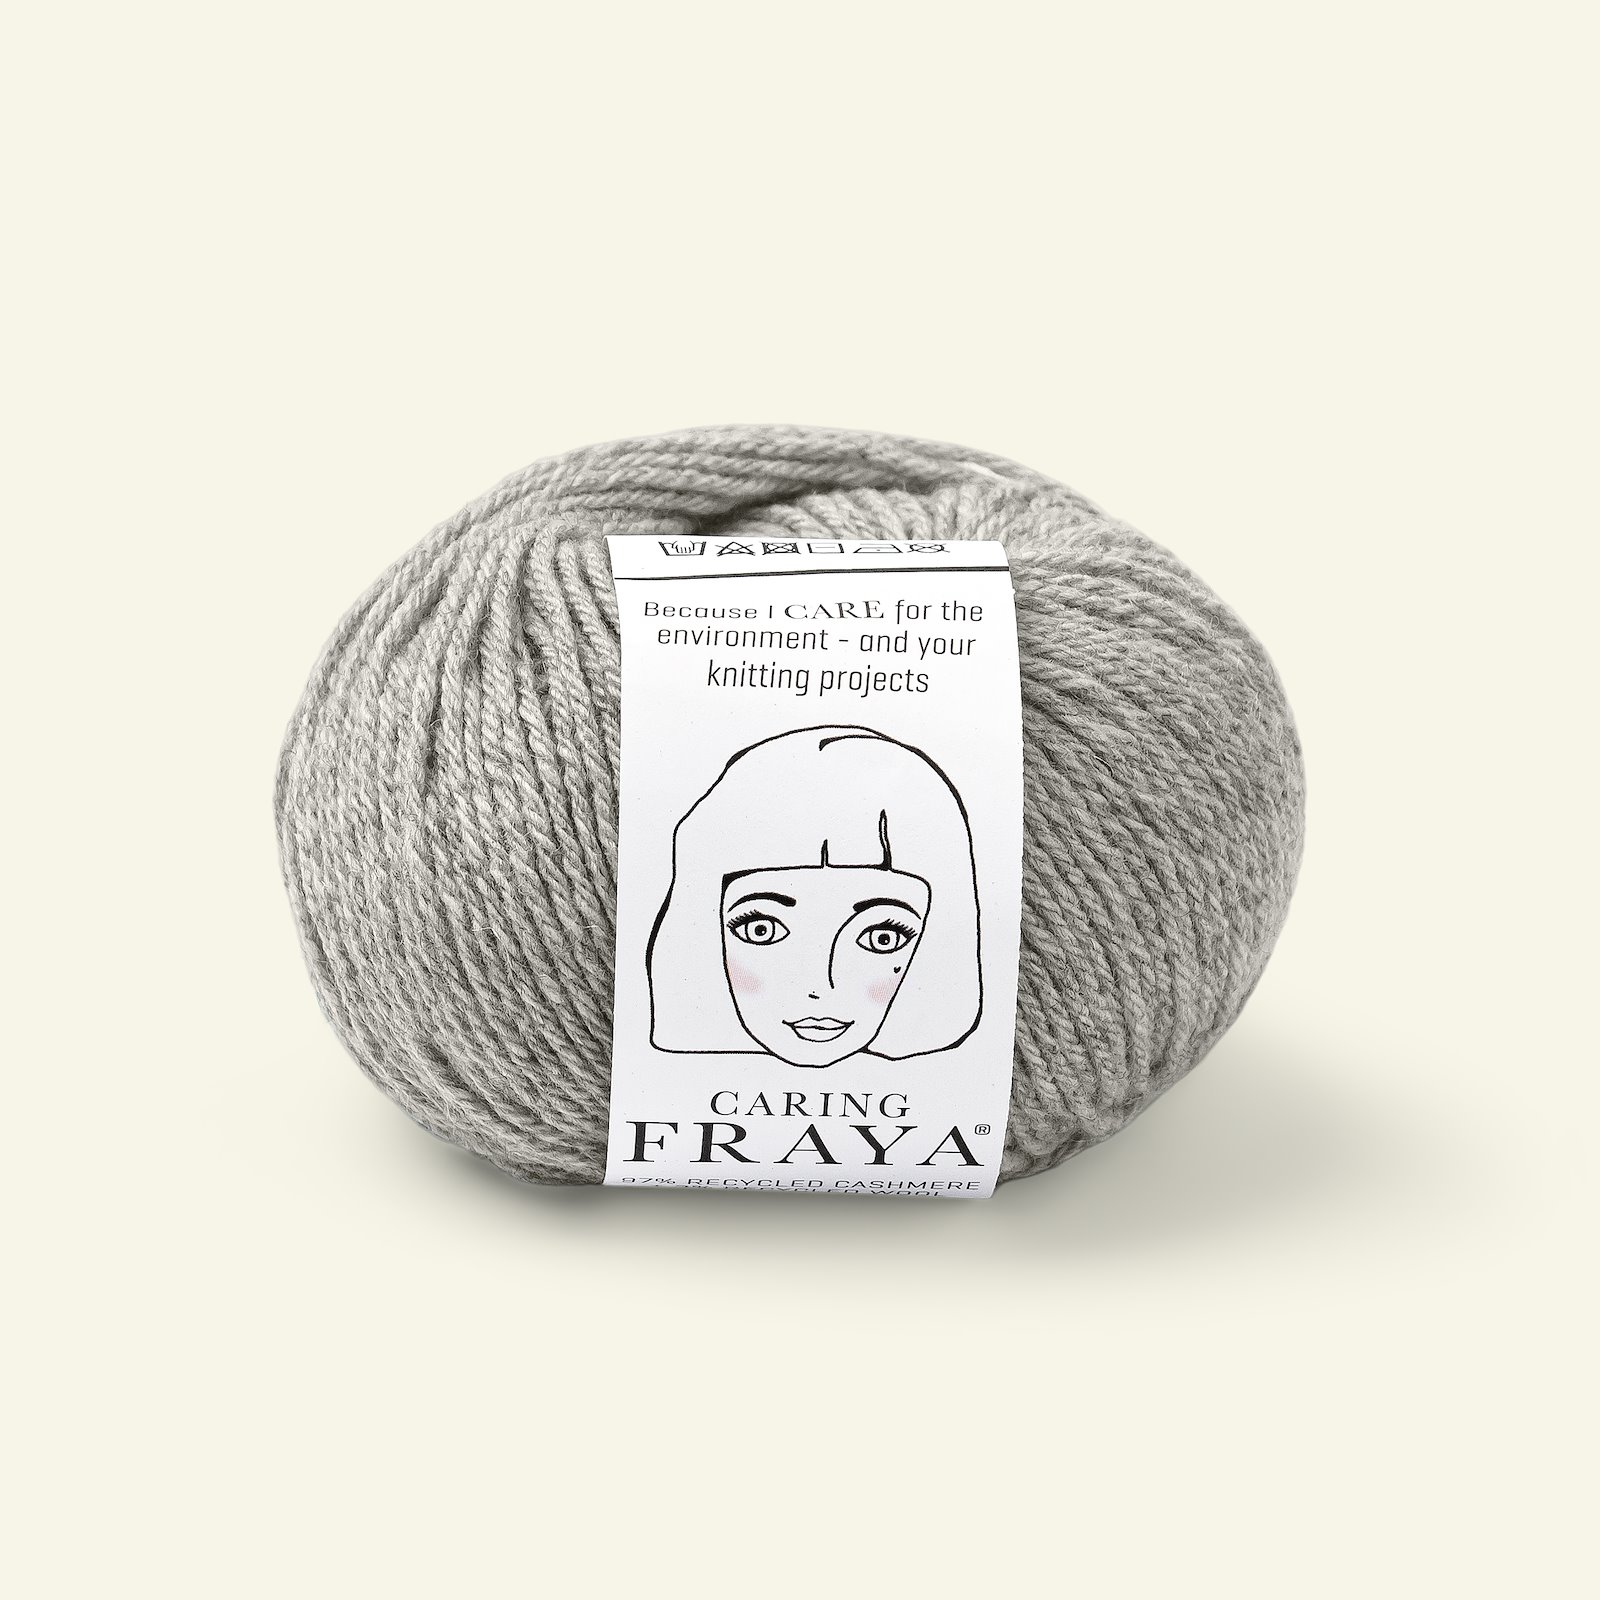 FRAYA, recycle cashmere yarn "Caring", medium grey 90000114_pack